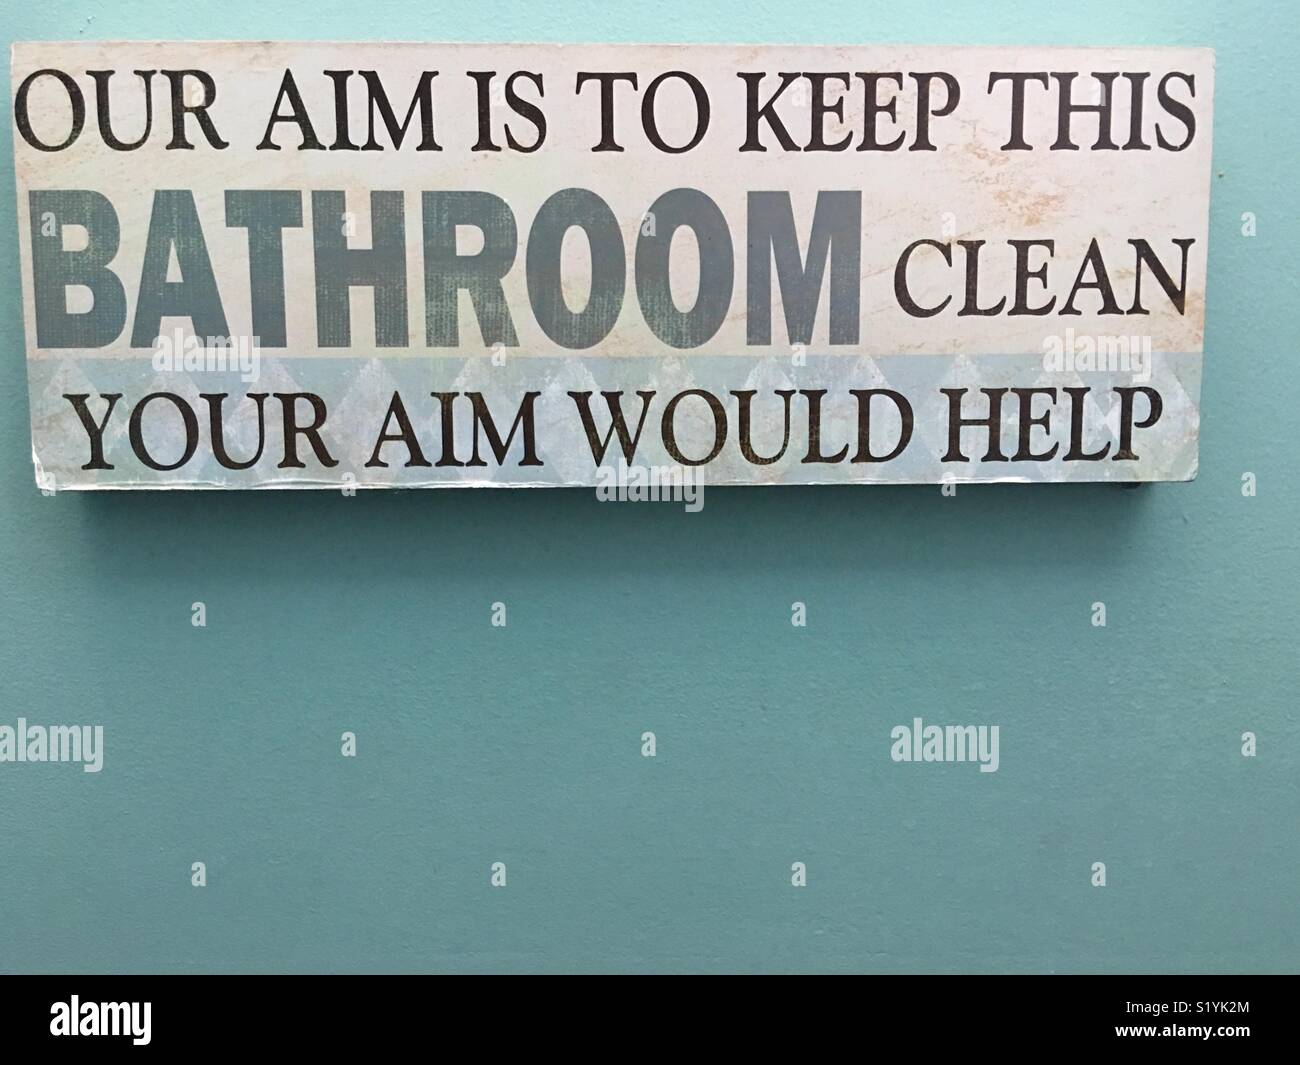 Keep this bathroom clean sign Stock Photo